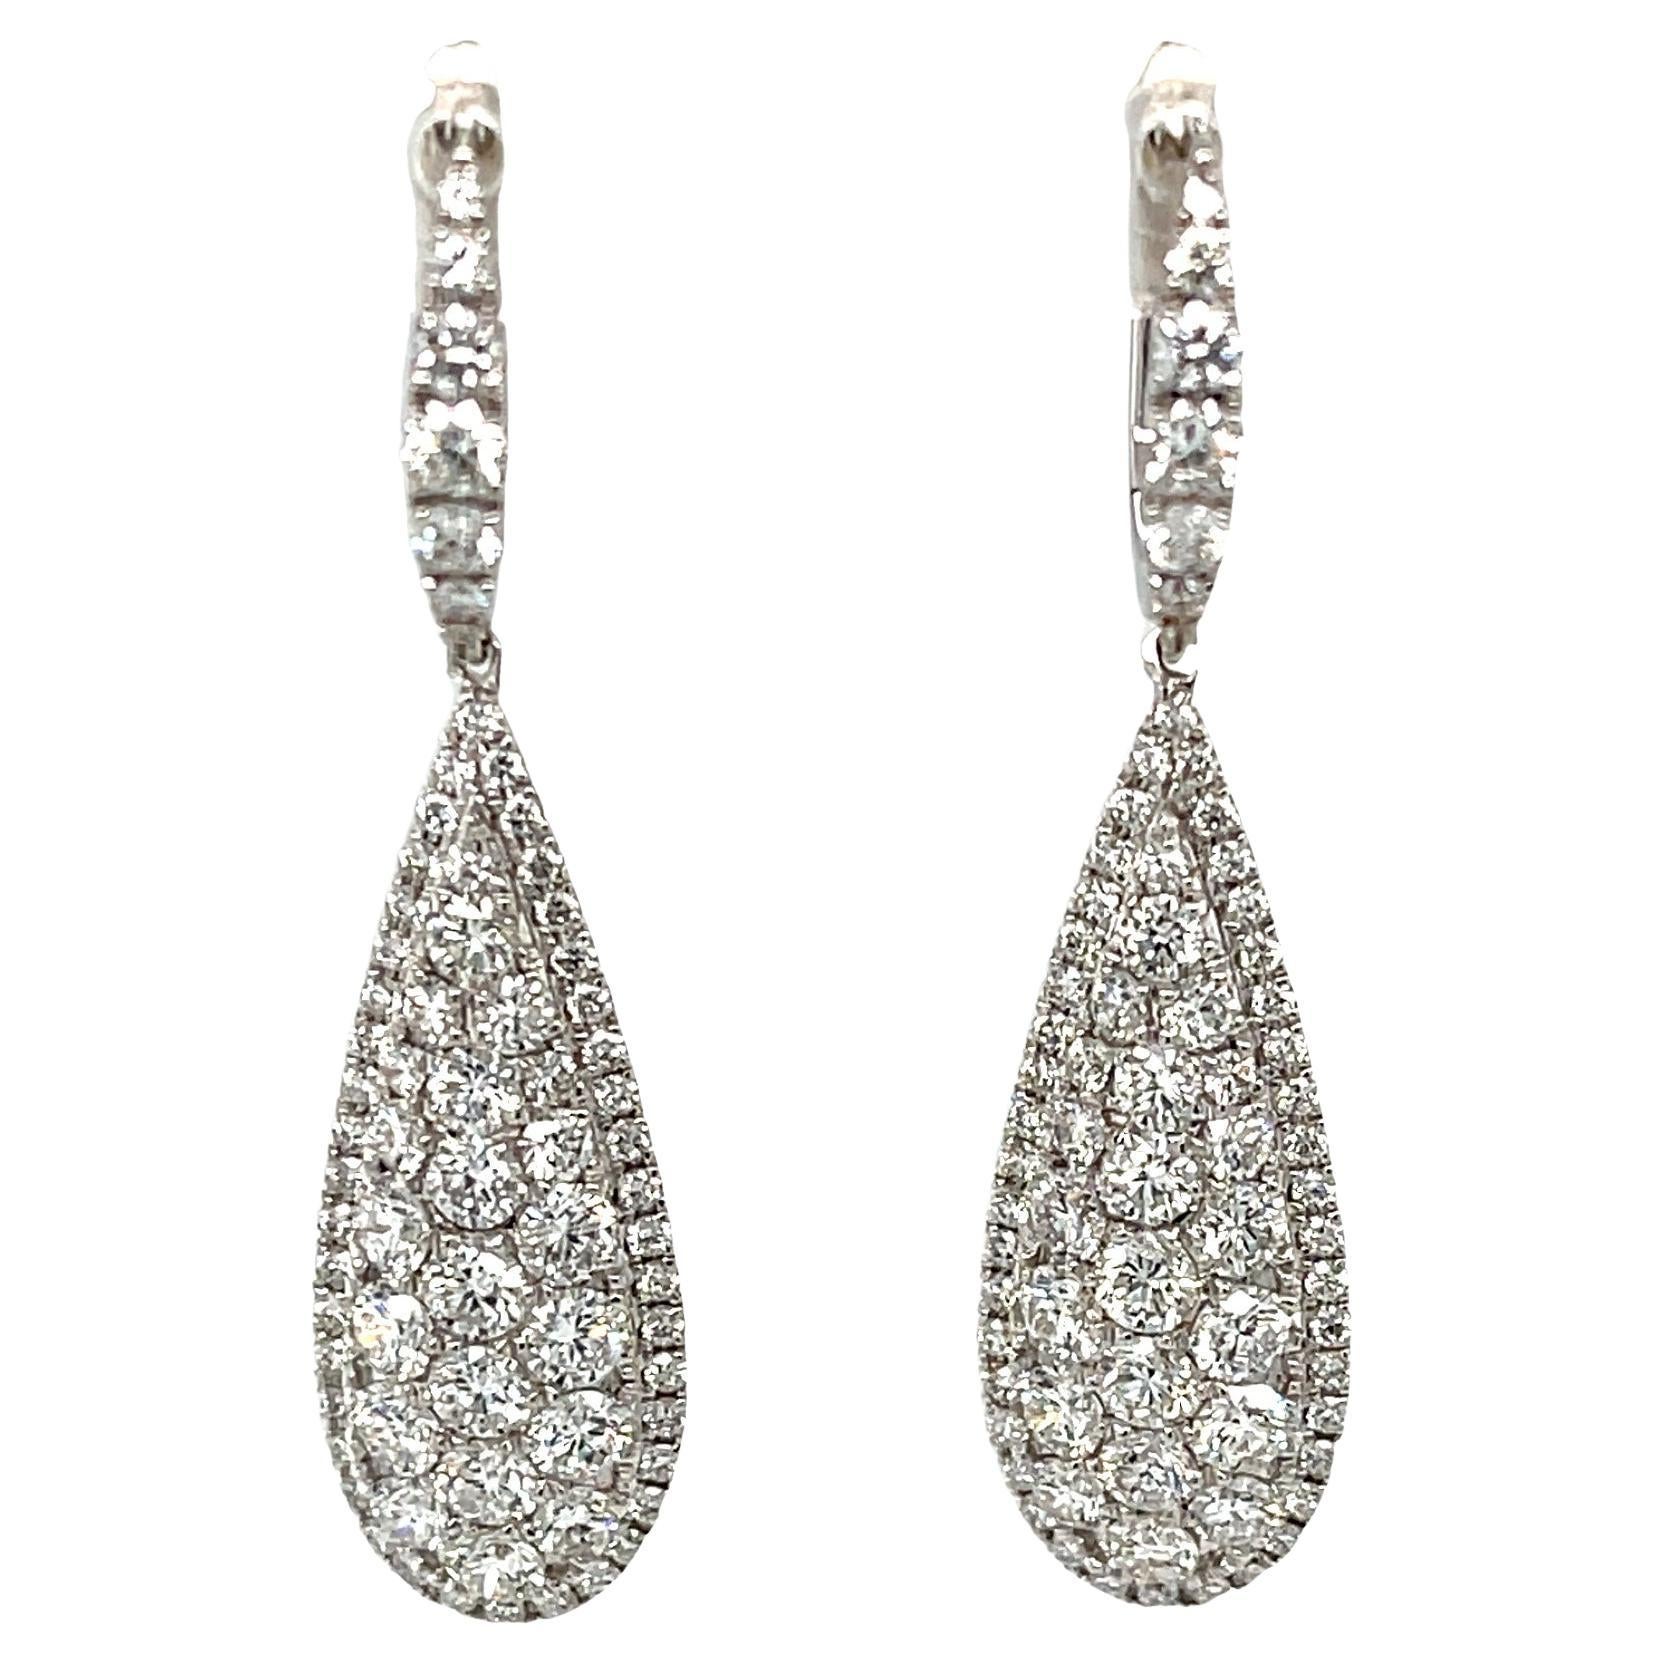 Diamond and 18k White Gold Teardrop Dangle Earrings, 3.15 Carats Total